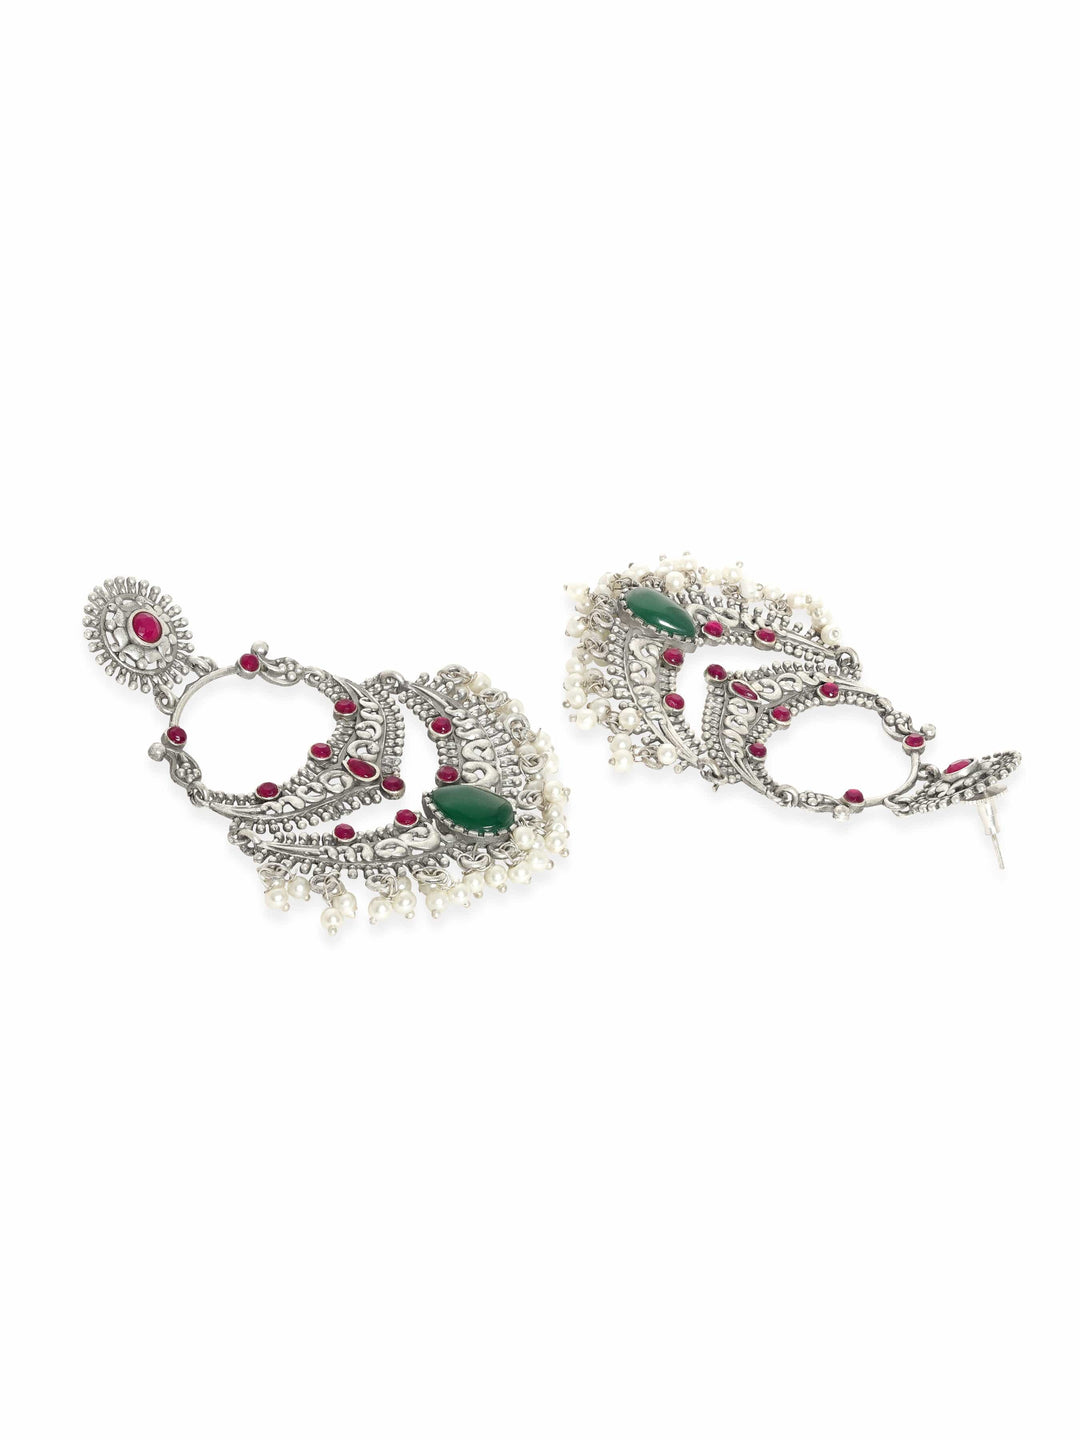 Rubans Illuminating Silver Base Chandbali Earrings with Green and Pink Stones Earrings